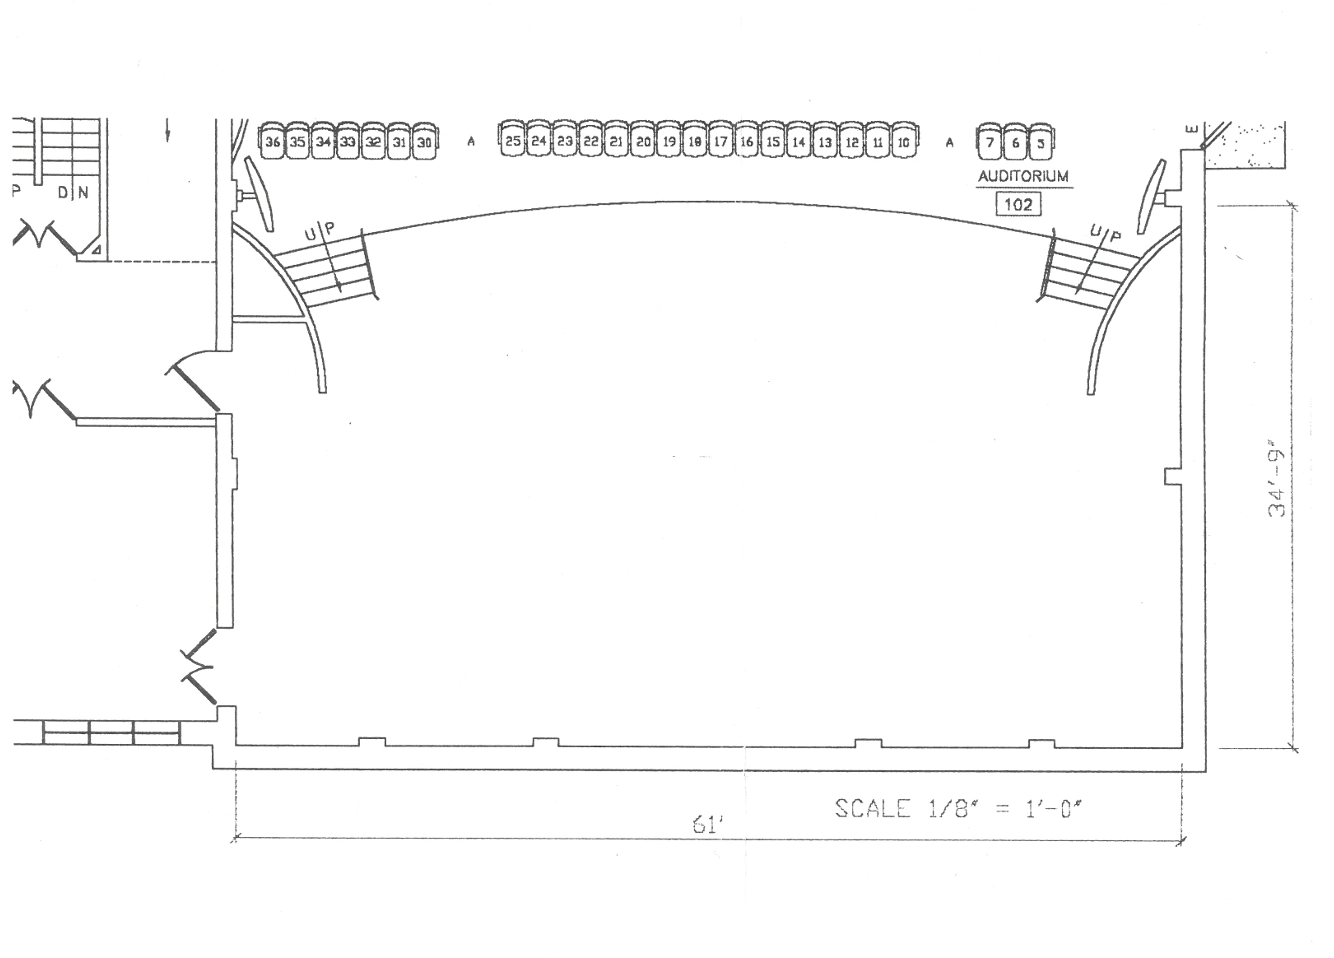 Schematic diagram of Concert Hall Stage